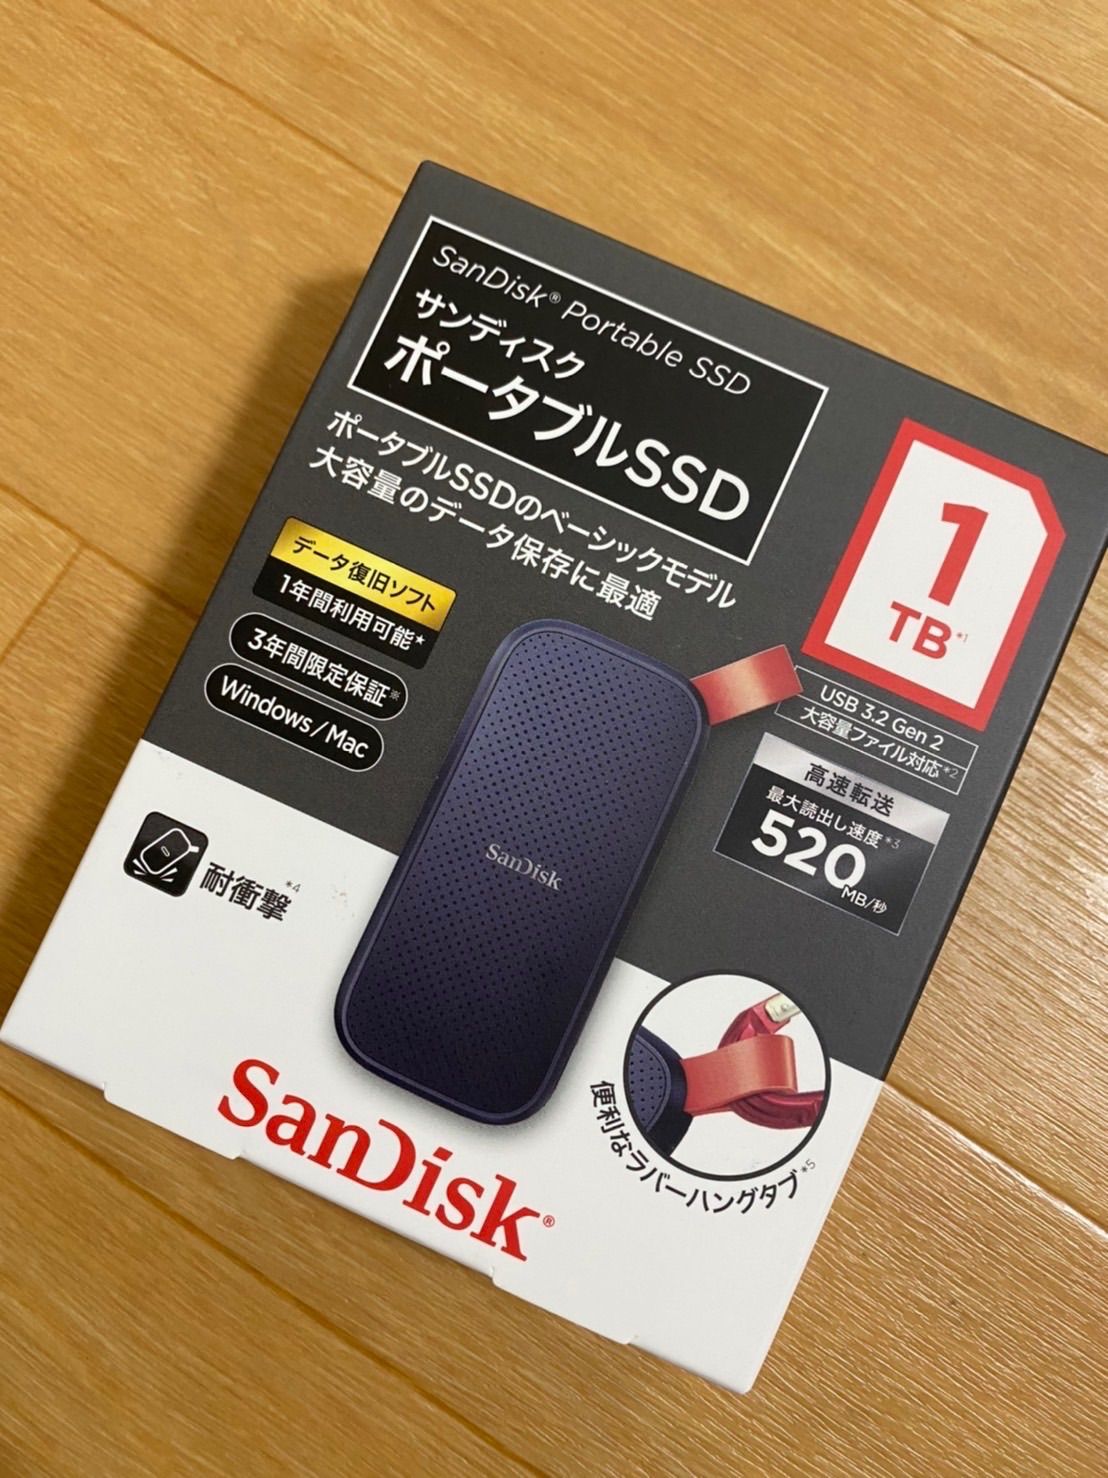 SanDisk SDSSDE30-1T00-J25 ポータブルSSD 1TB